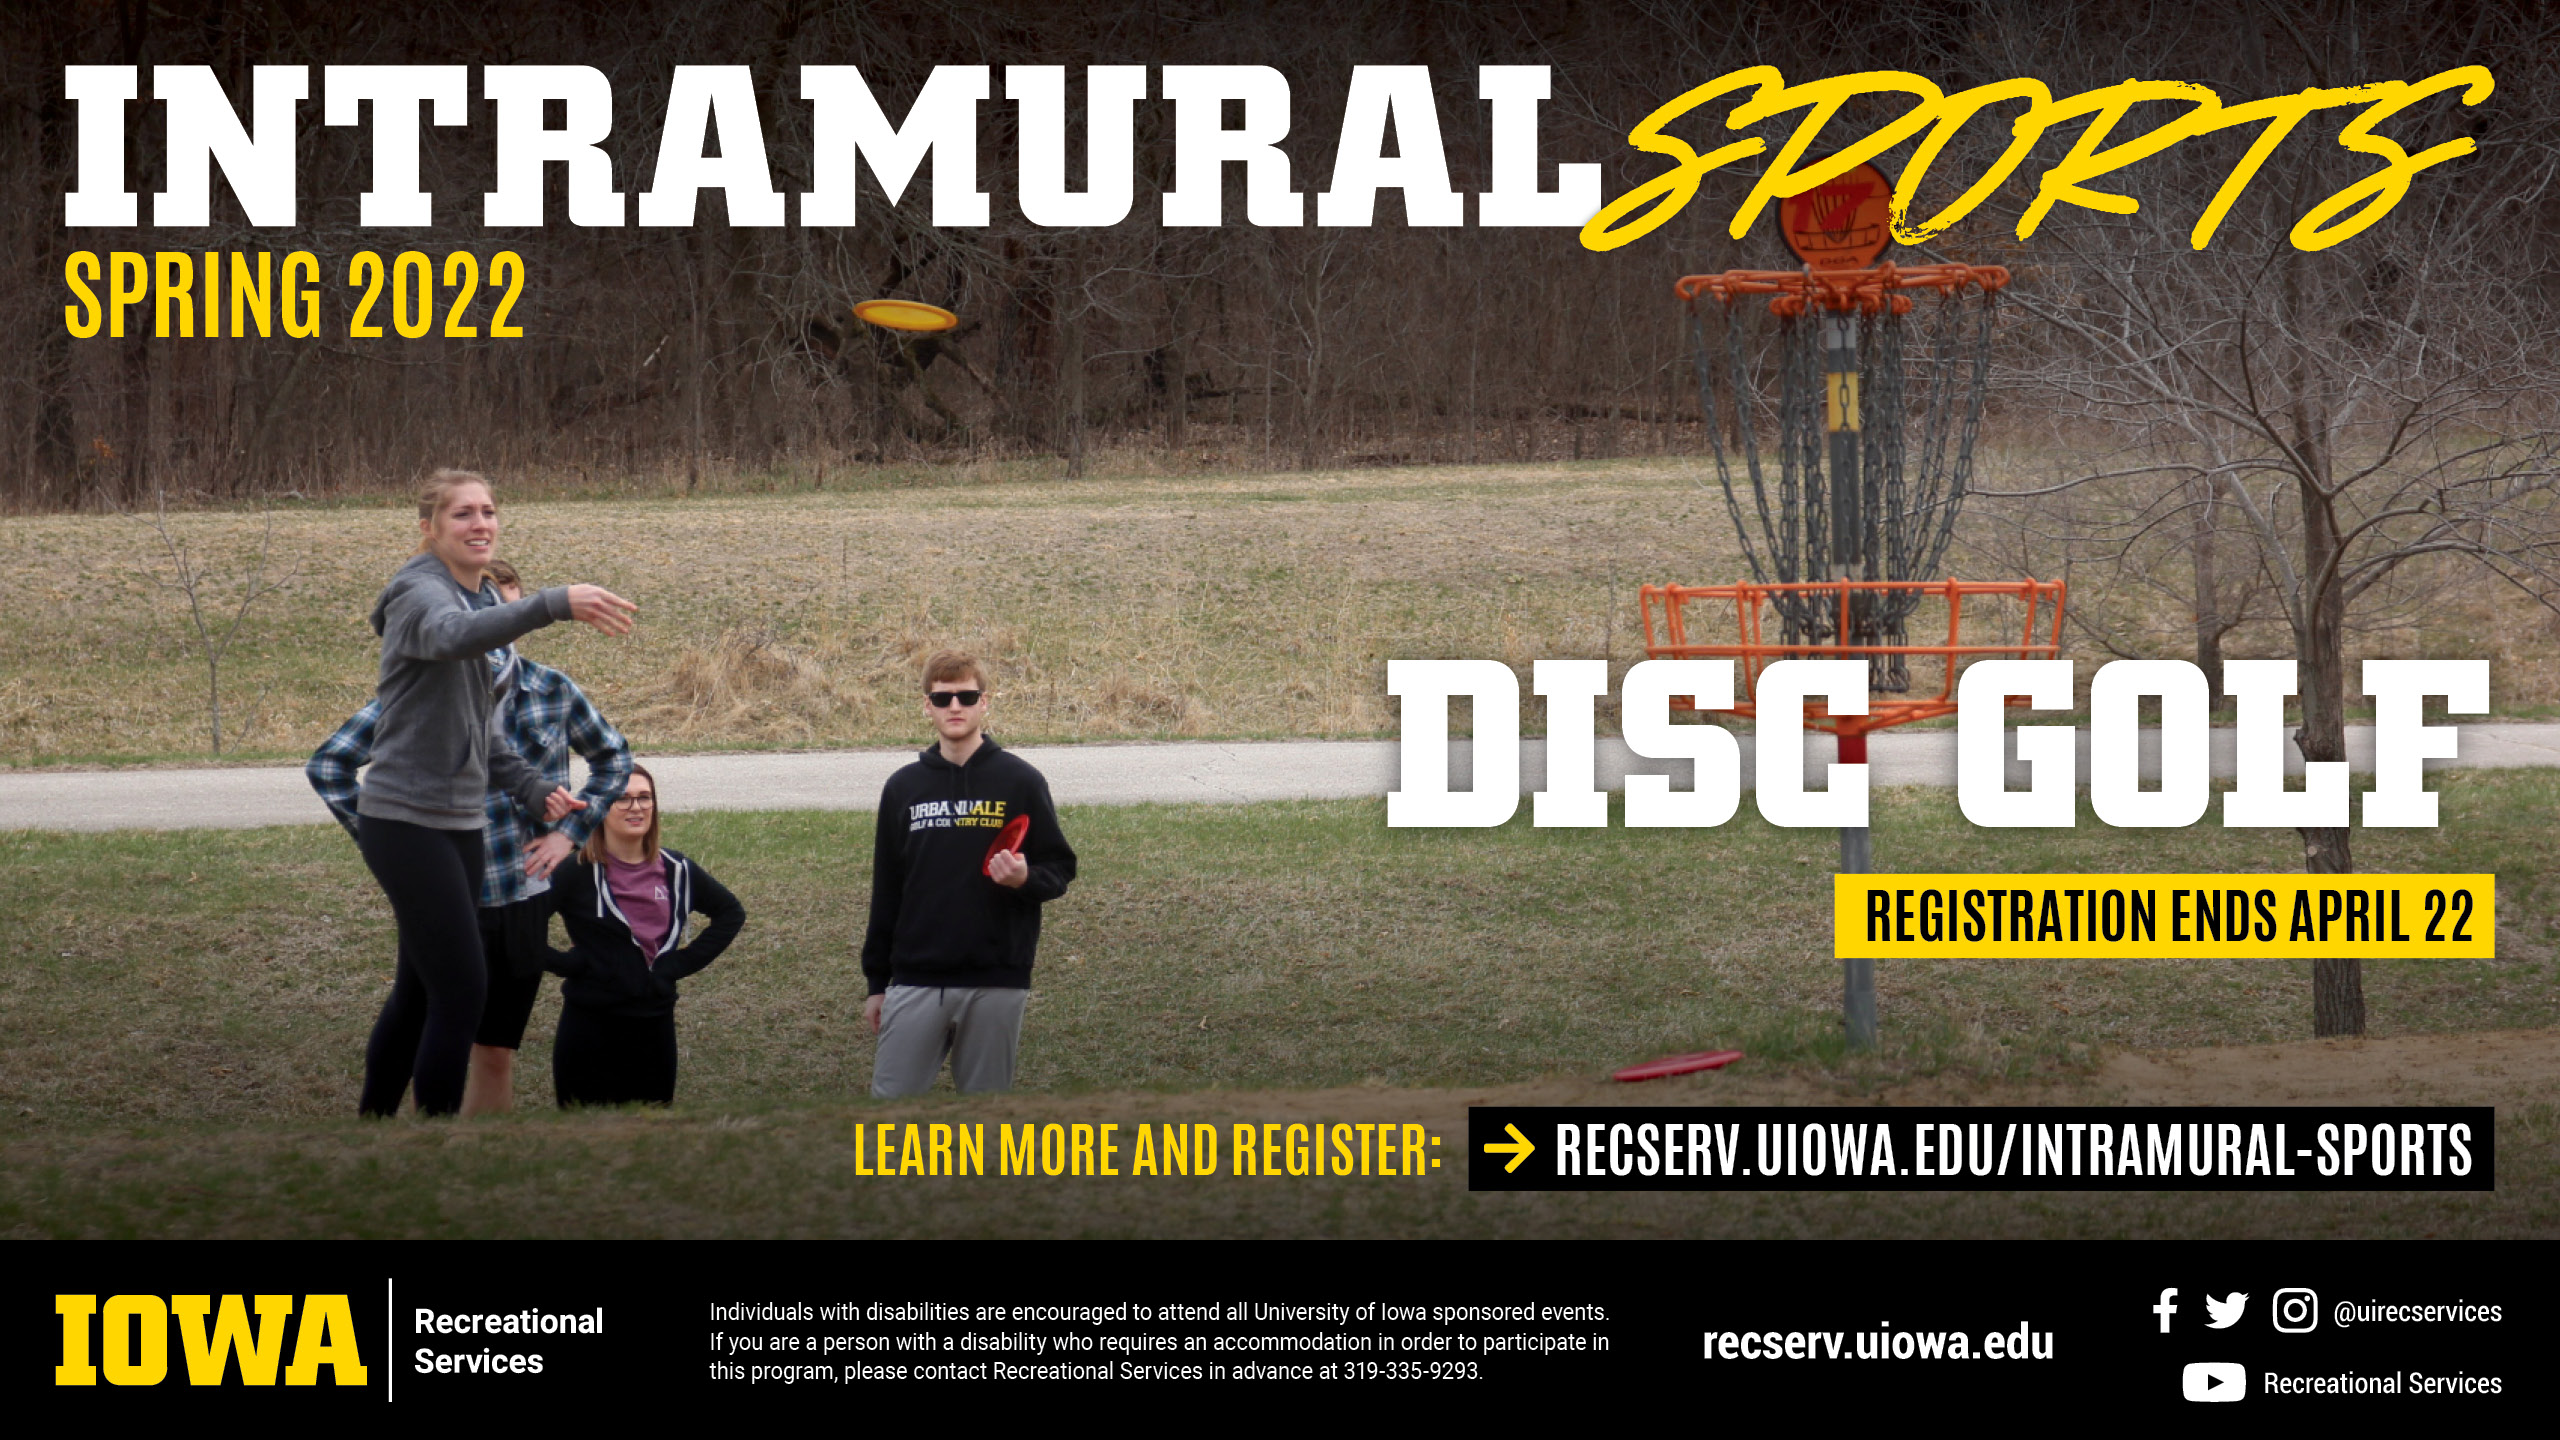 Intramural Sports Spring 2022 Disc Golf Registration ends April 22 learn more and register at: recserv.uiowa.edu/intramural-sports